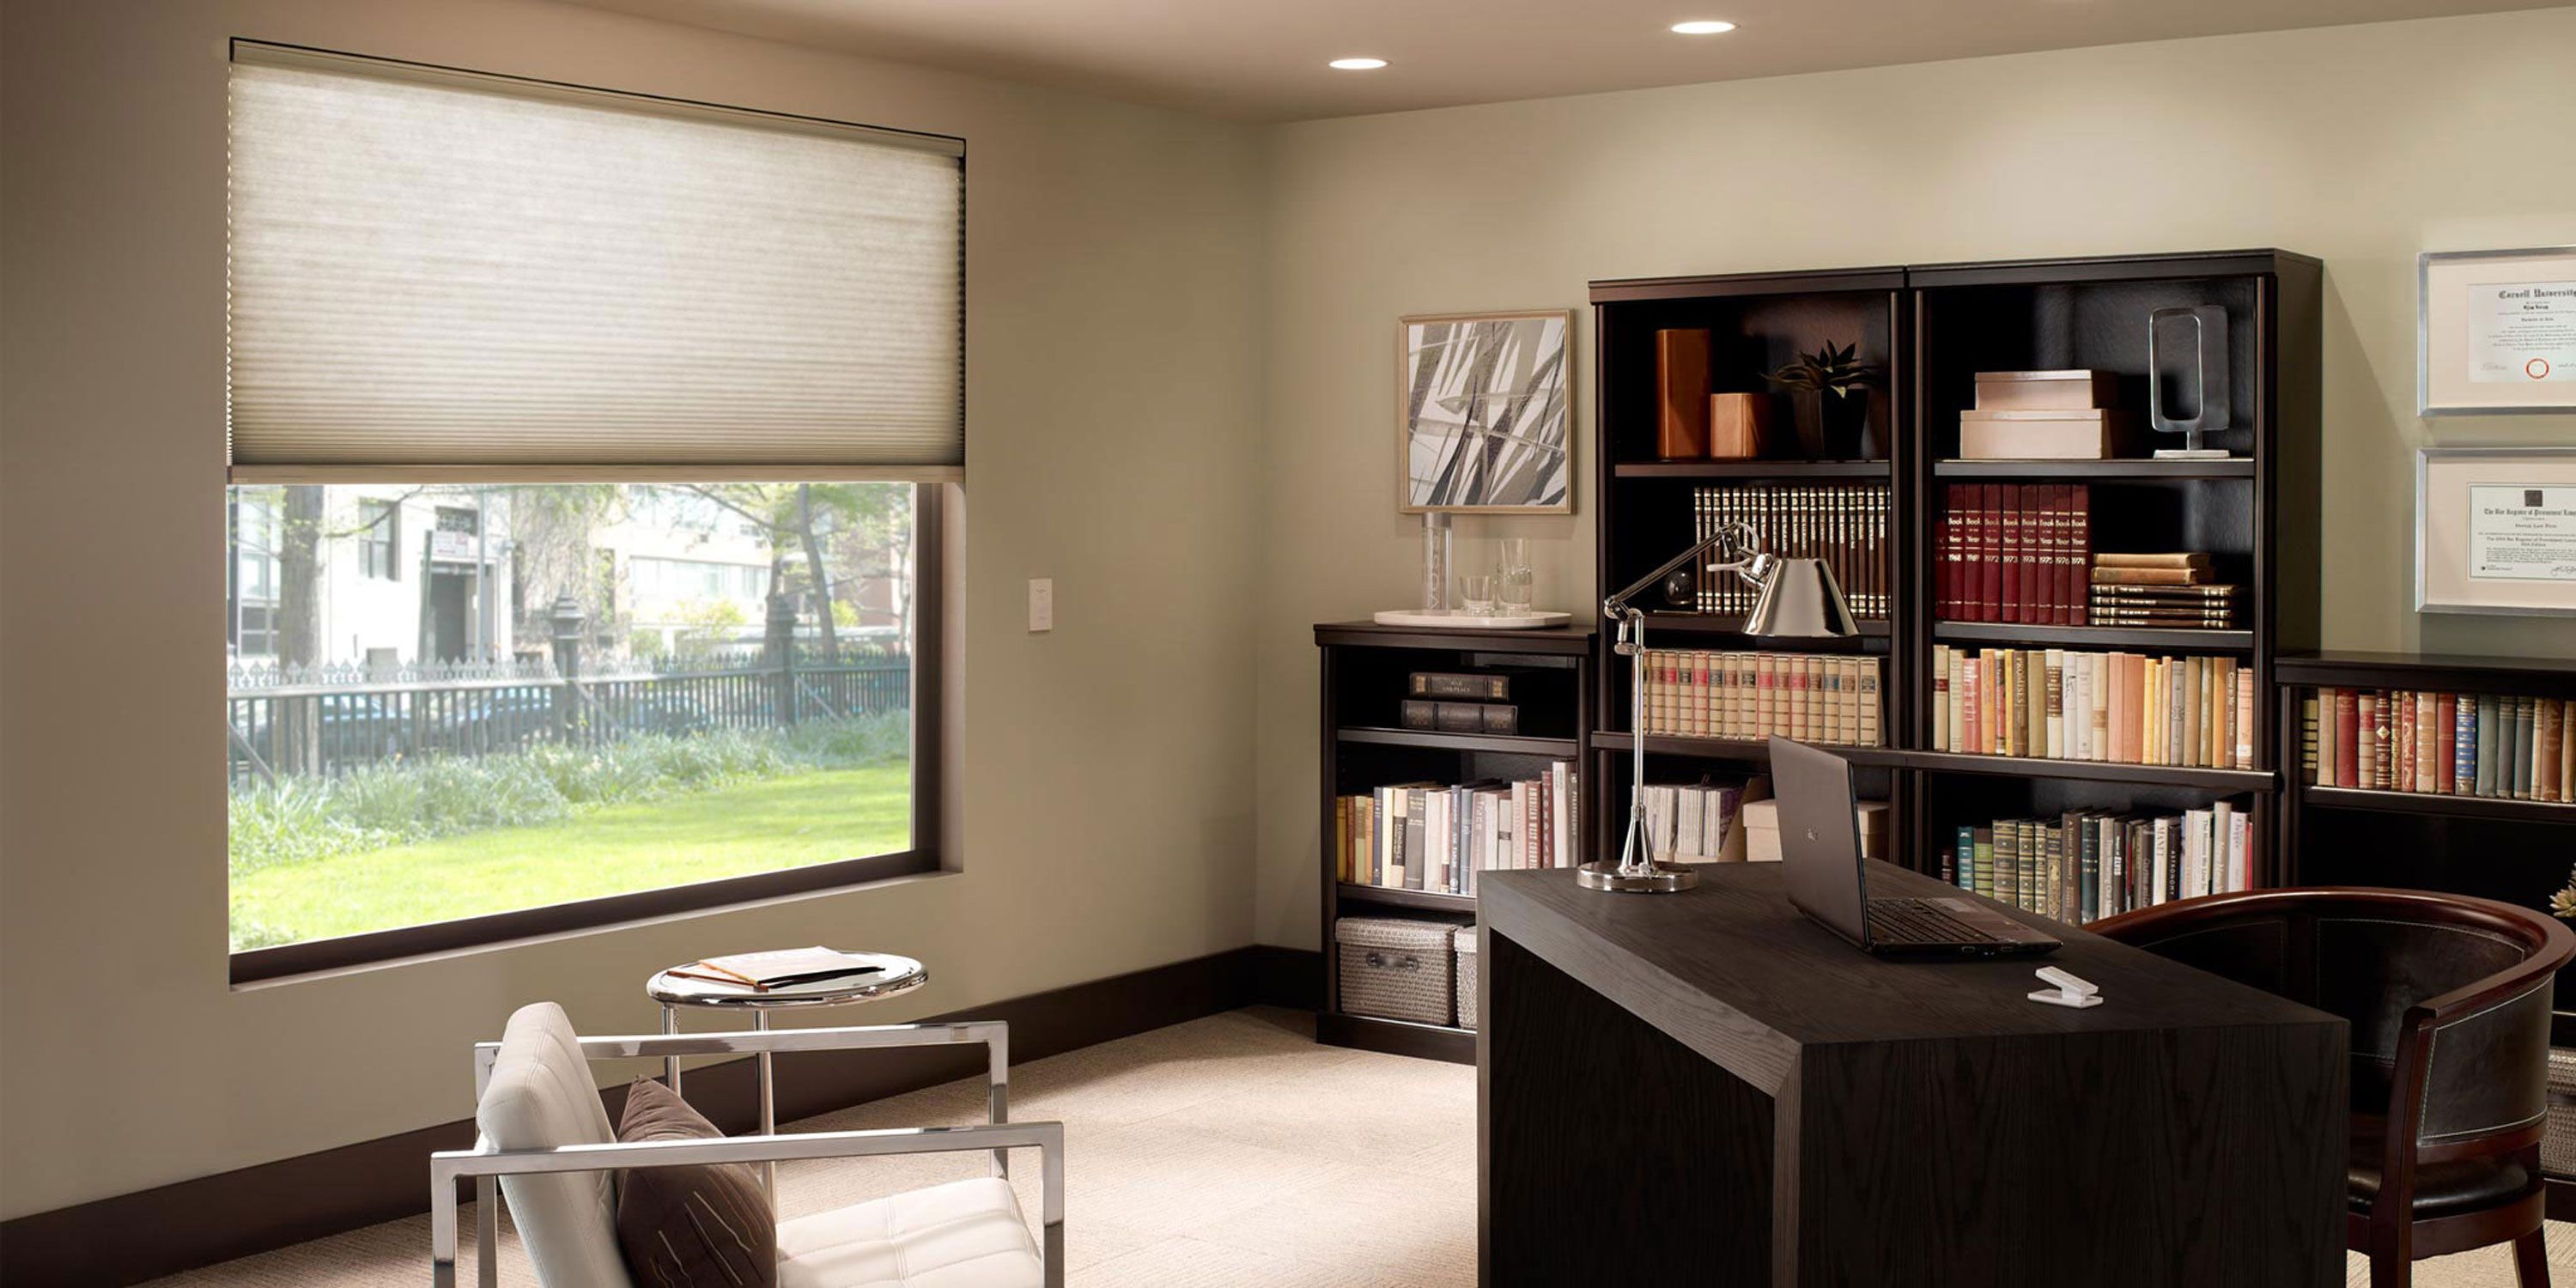 home office, window treatments shades, bookshelves, wooden desk